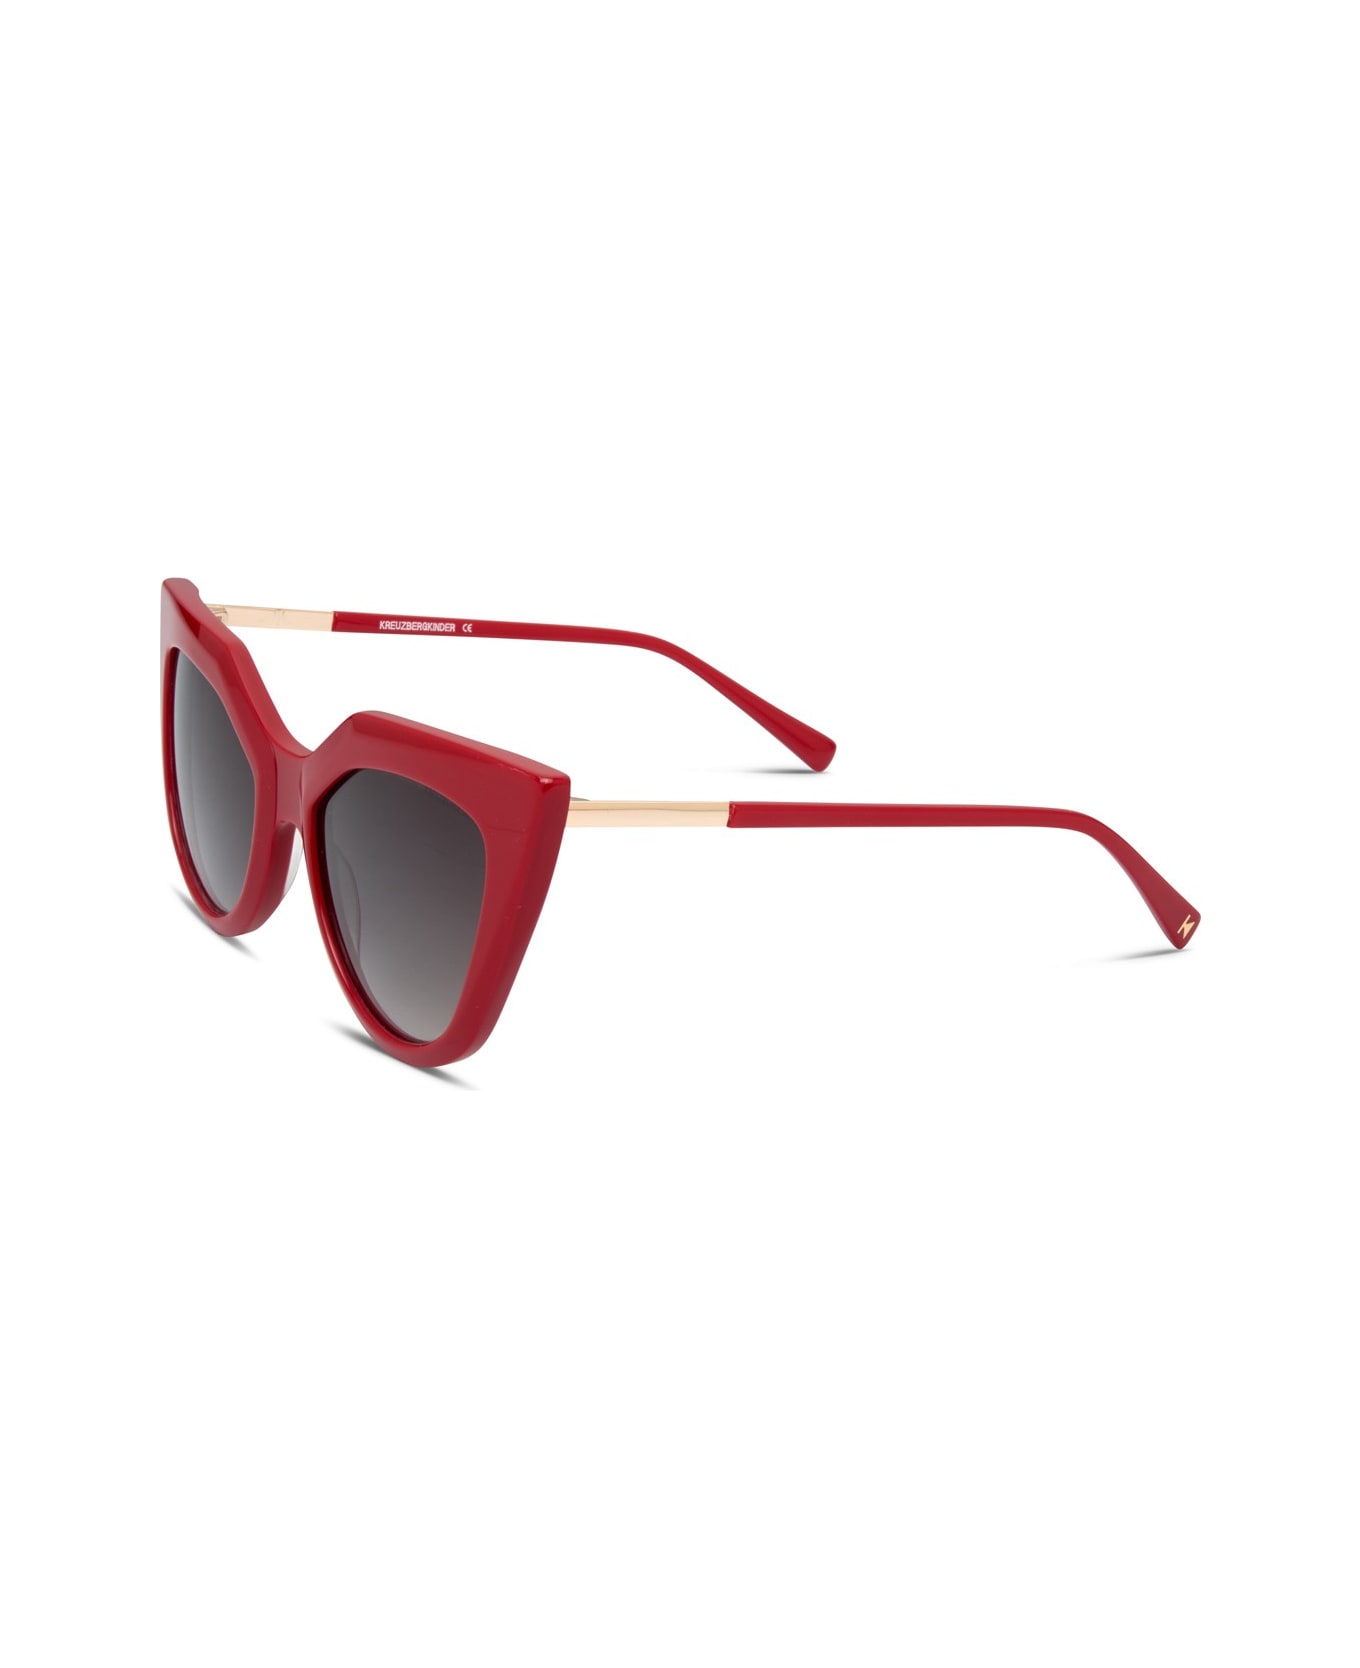 Kreuzbergkinder Venus Sunglasses - Rosso サングラス